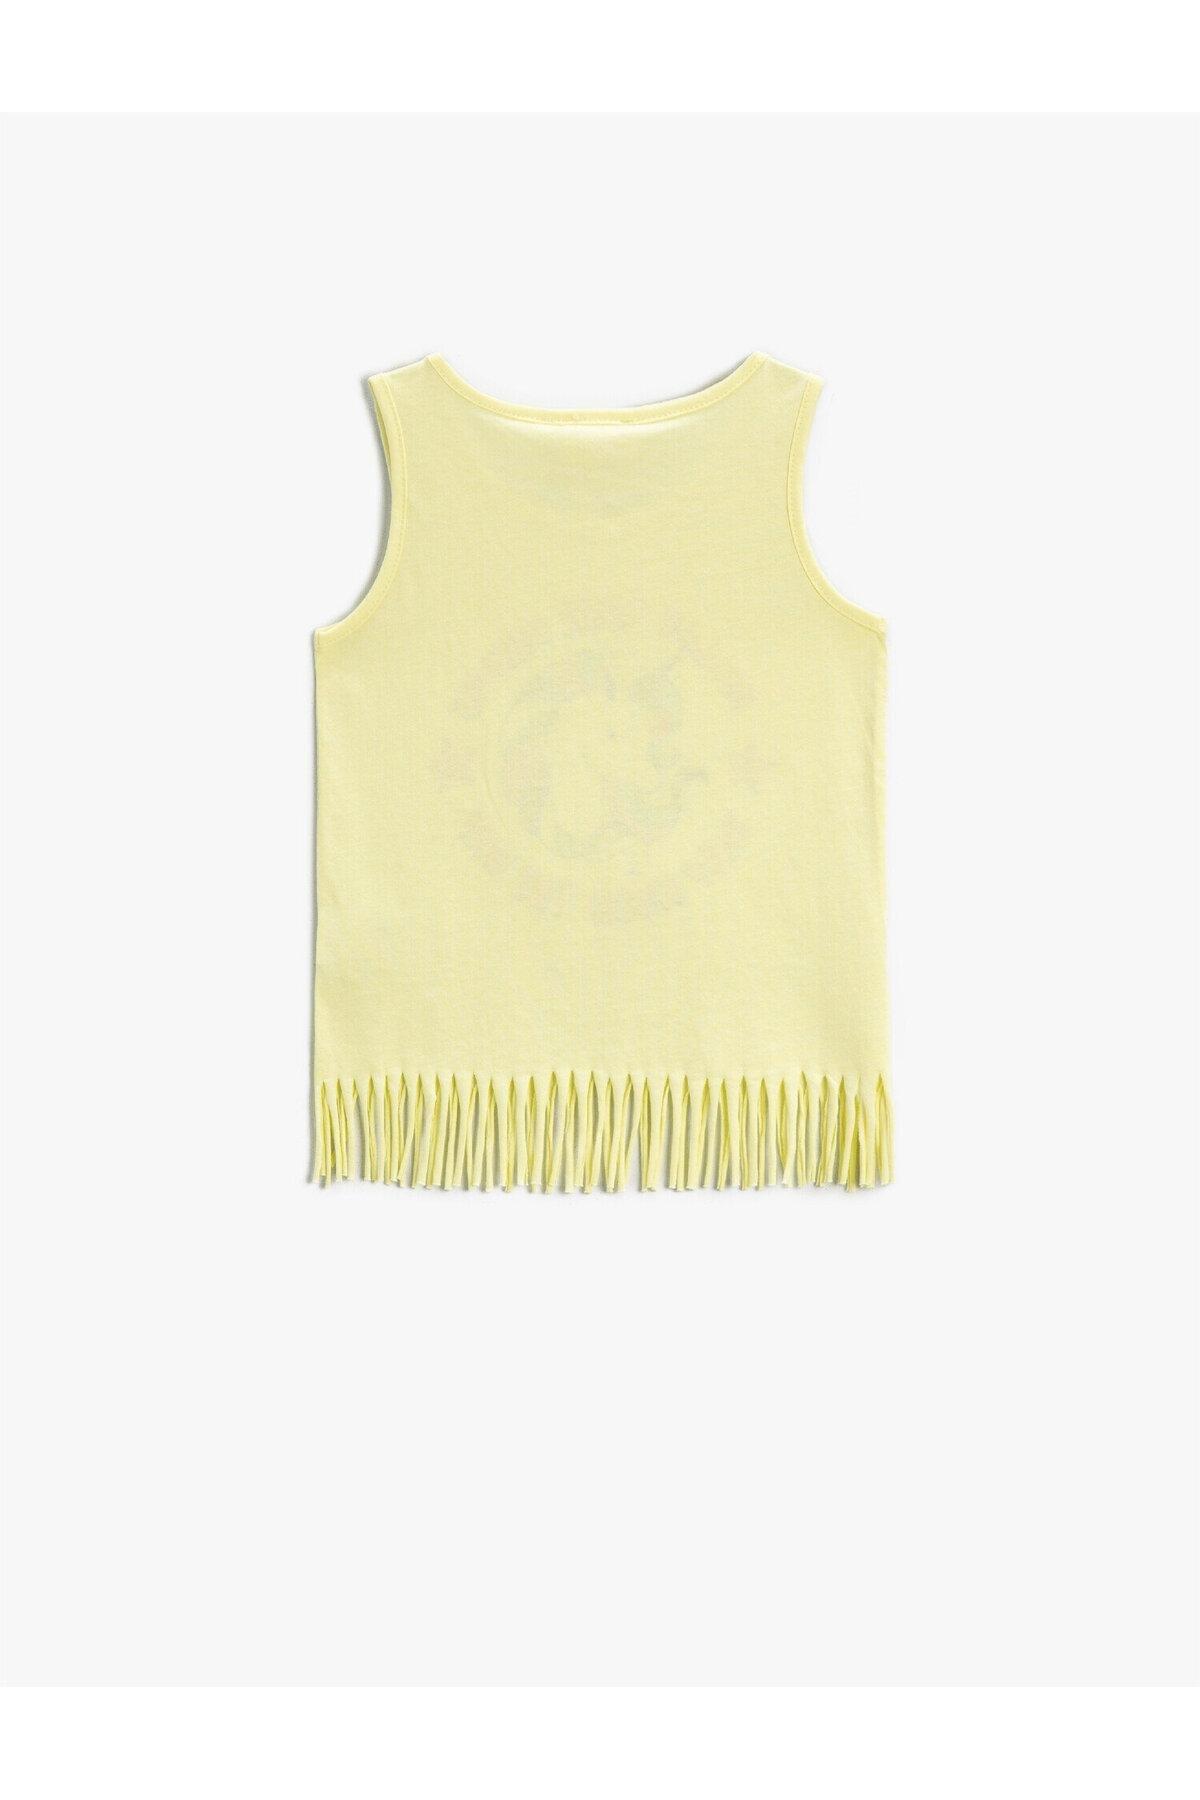 Koton - Yellow Printed Tassel Undershirt